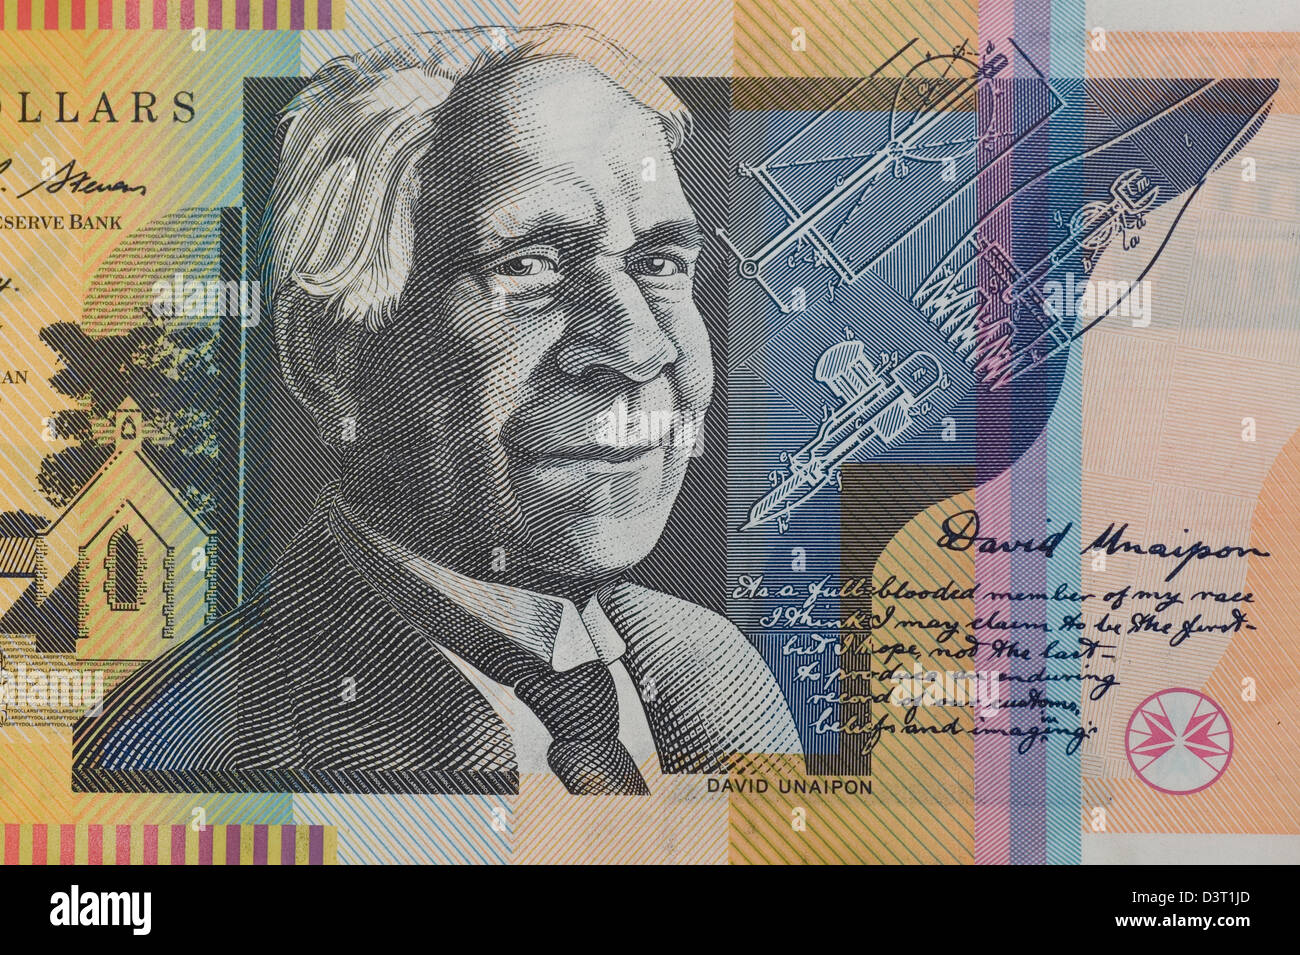 Australian Aborigine, David Unaipon, featured on the Australian $50 banknote Stock Photo